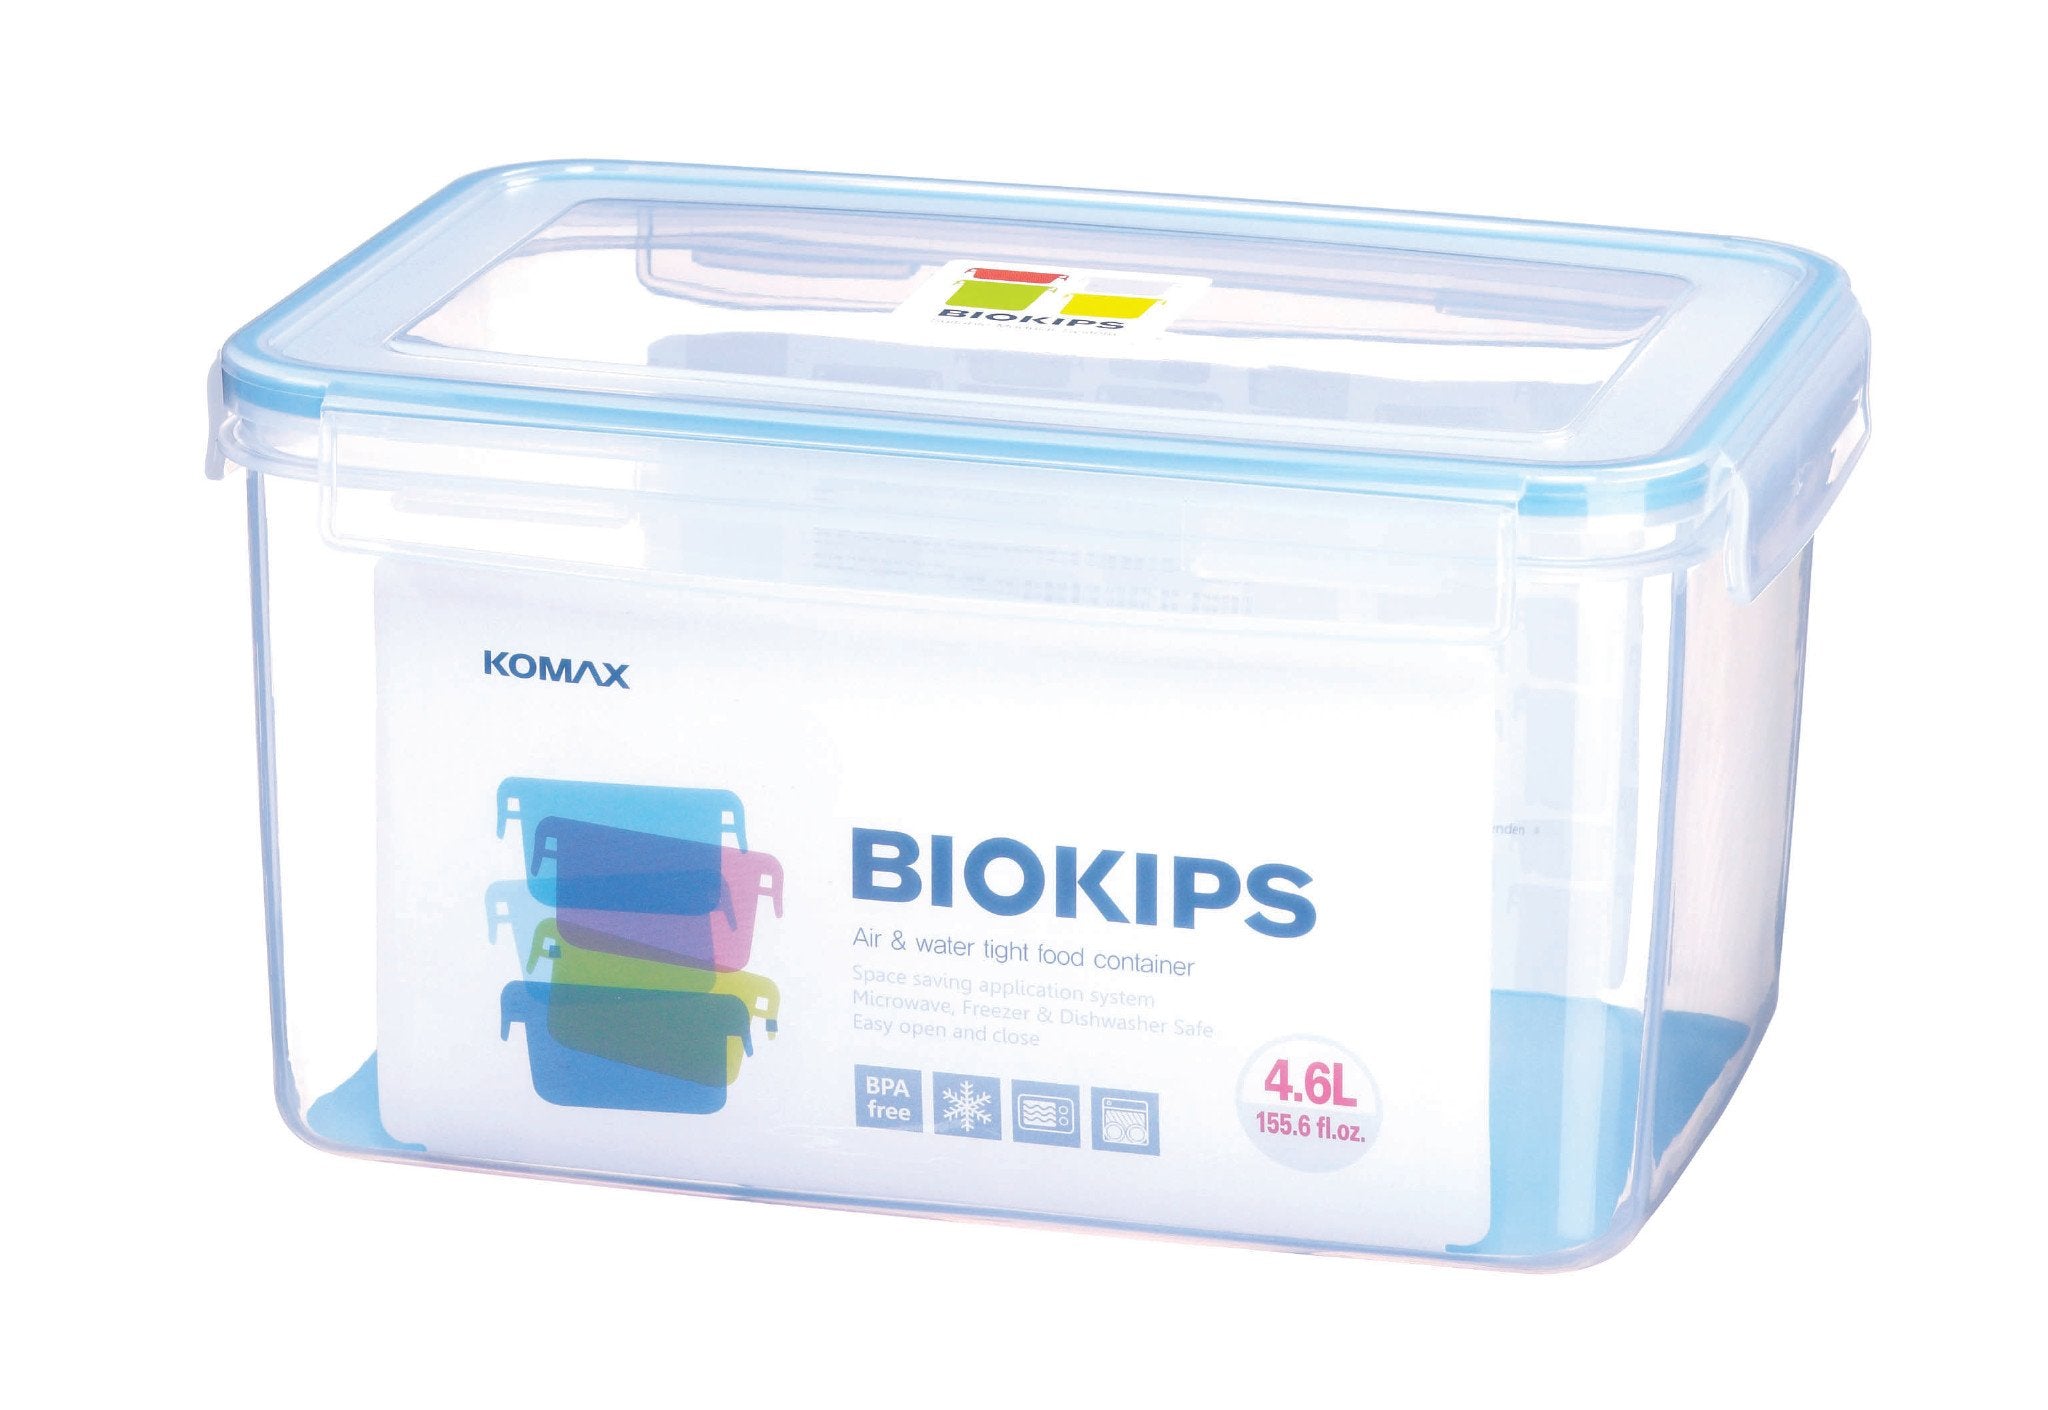 Komax Biokips Rectangular Food Storage Container, 4.6 L